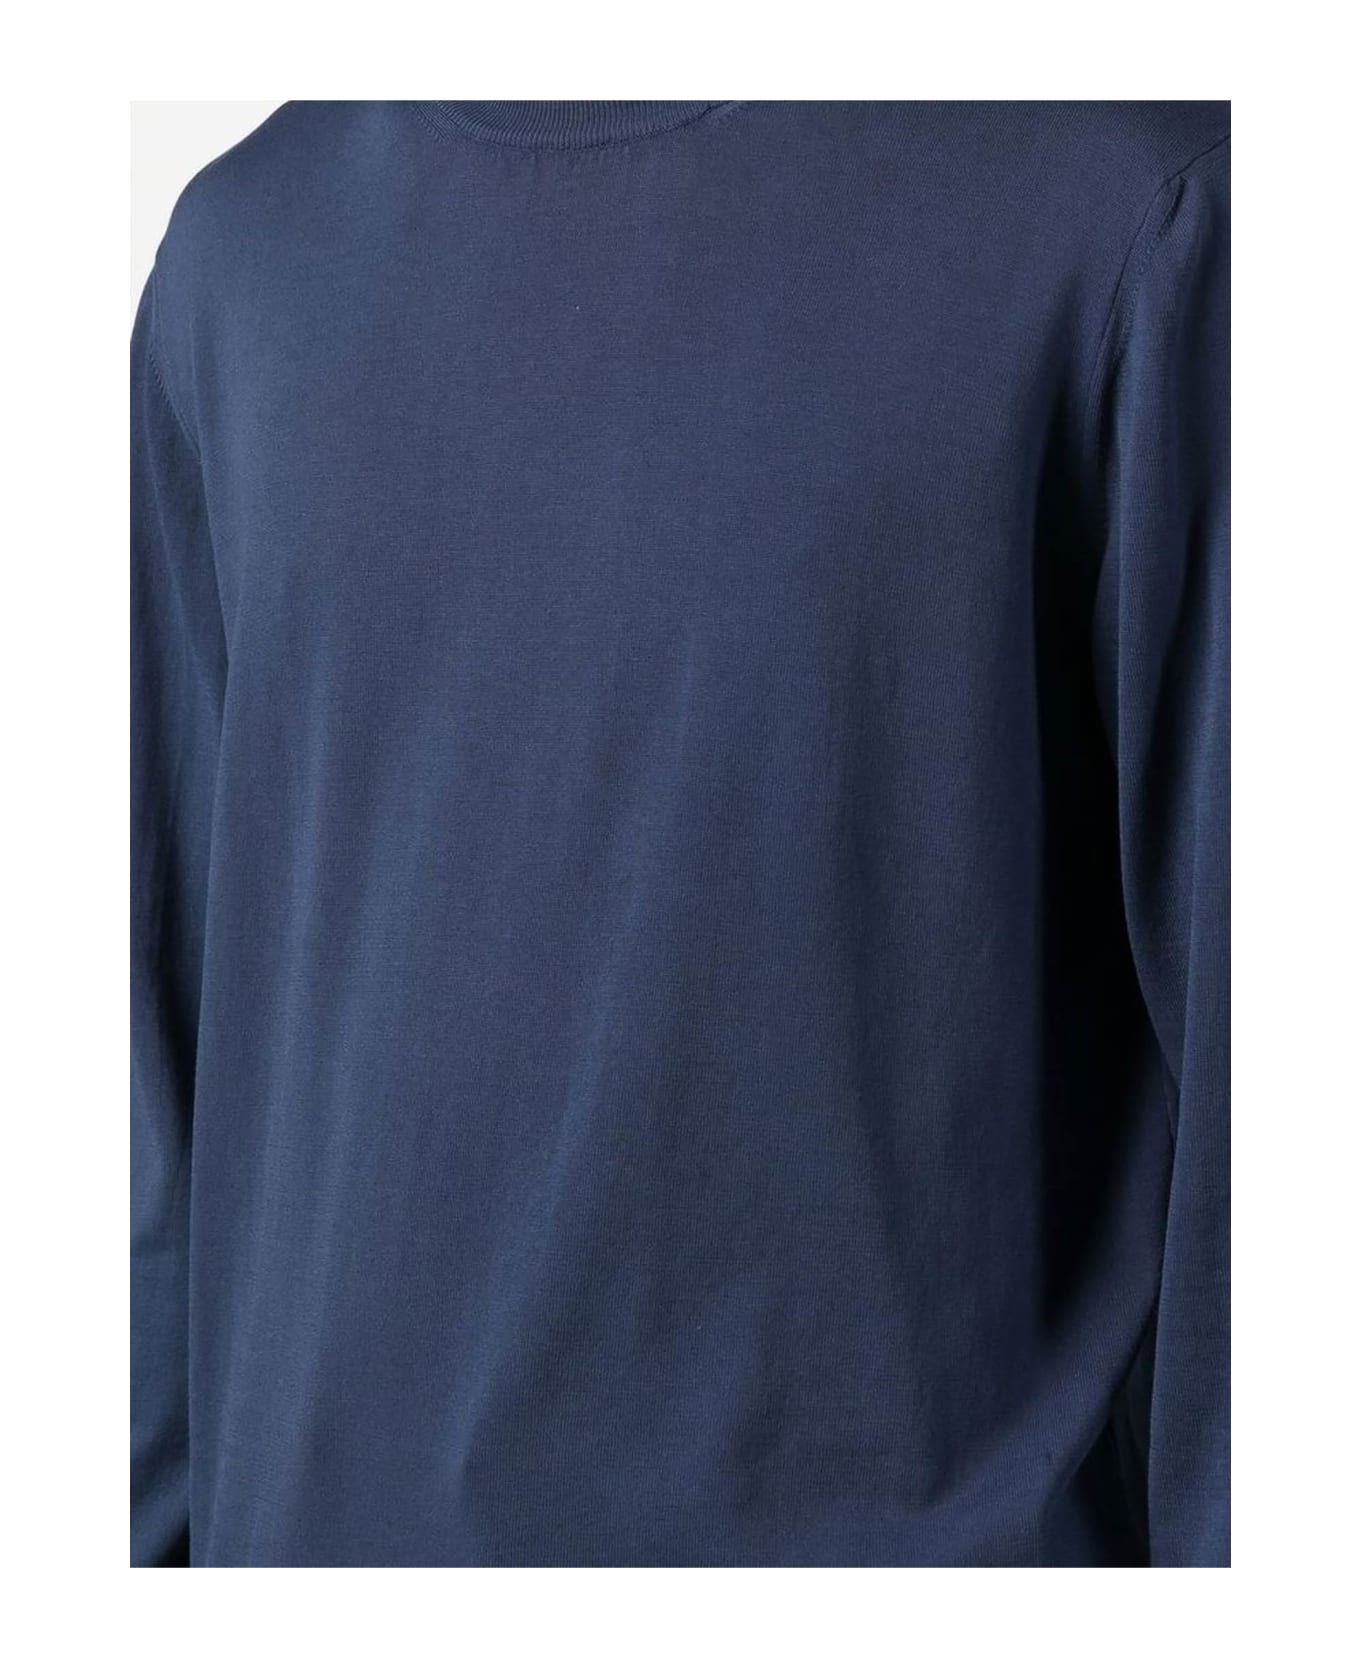 Fay Blue Cotton Knit Sweater - Blue